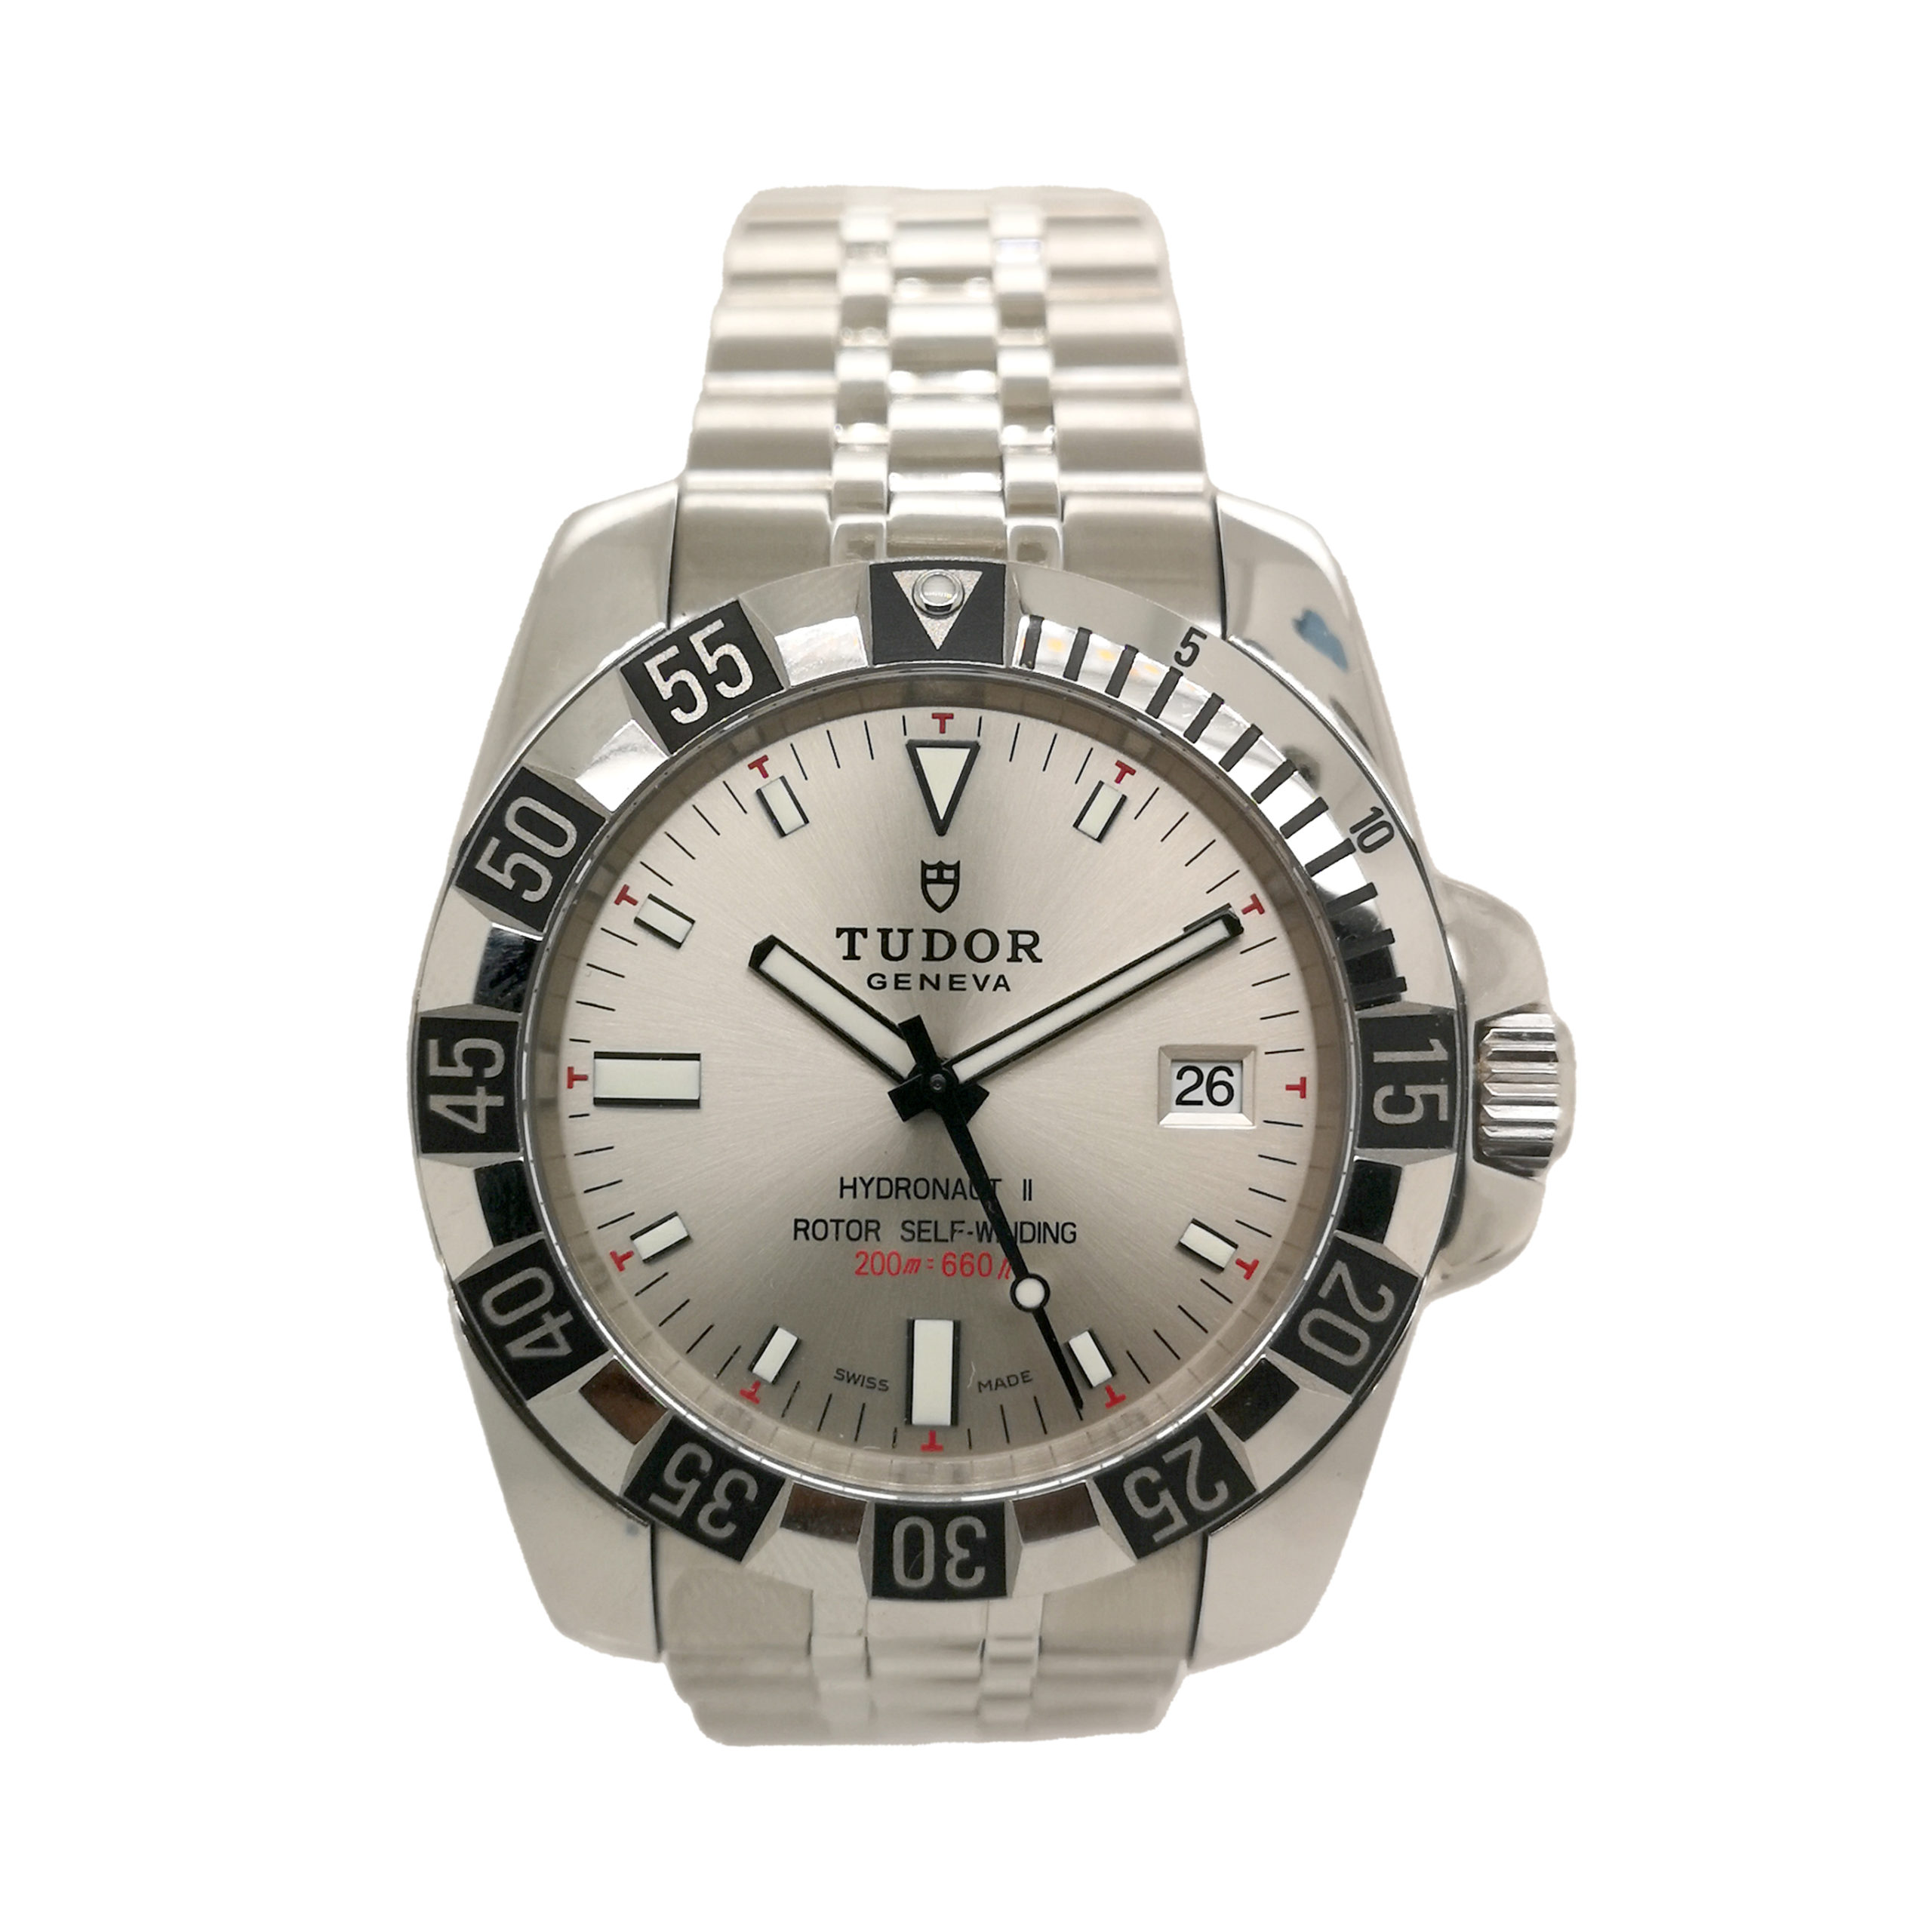 Tudor Hydronaut II 20030 Watch